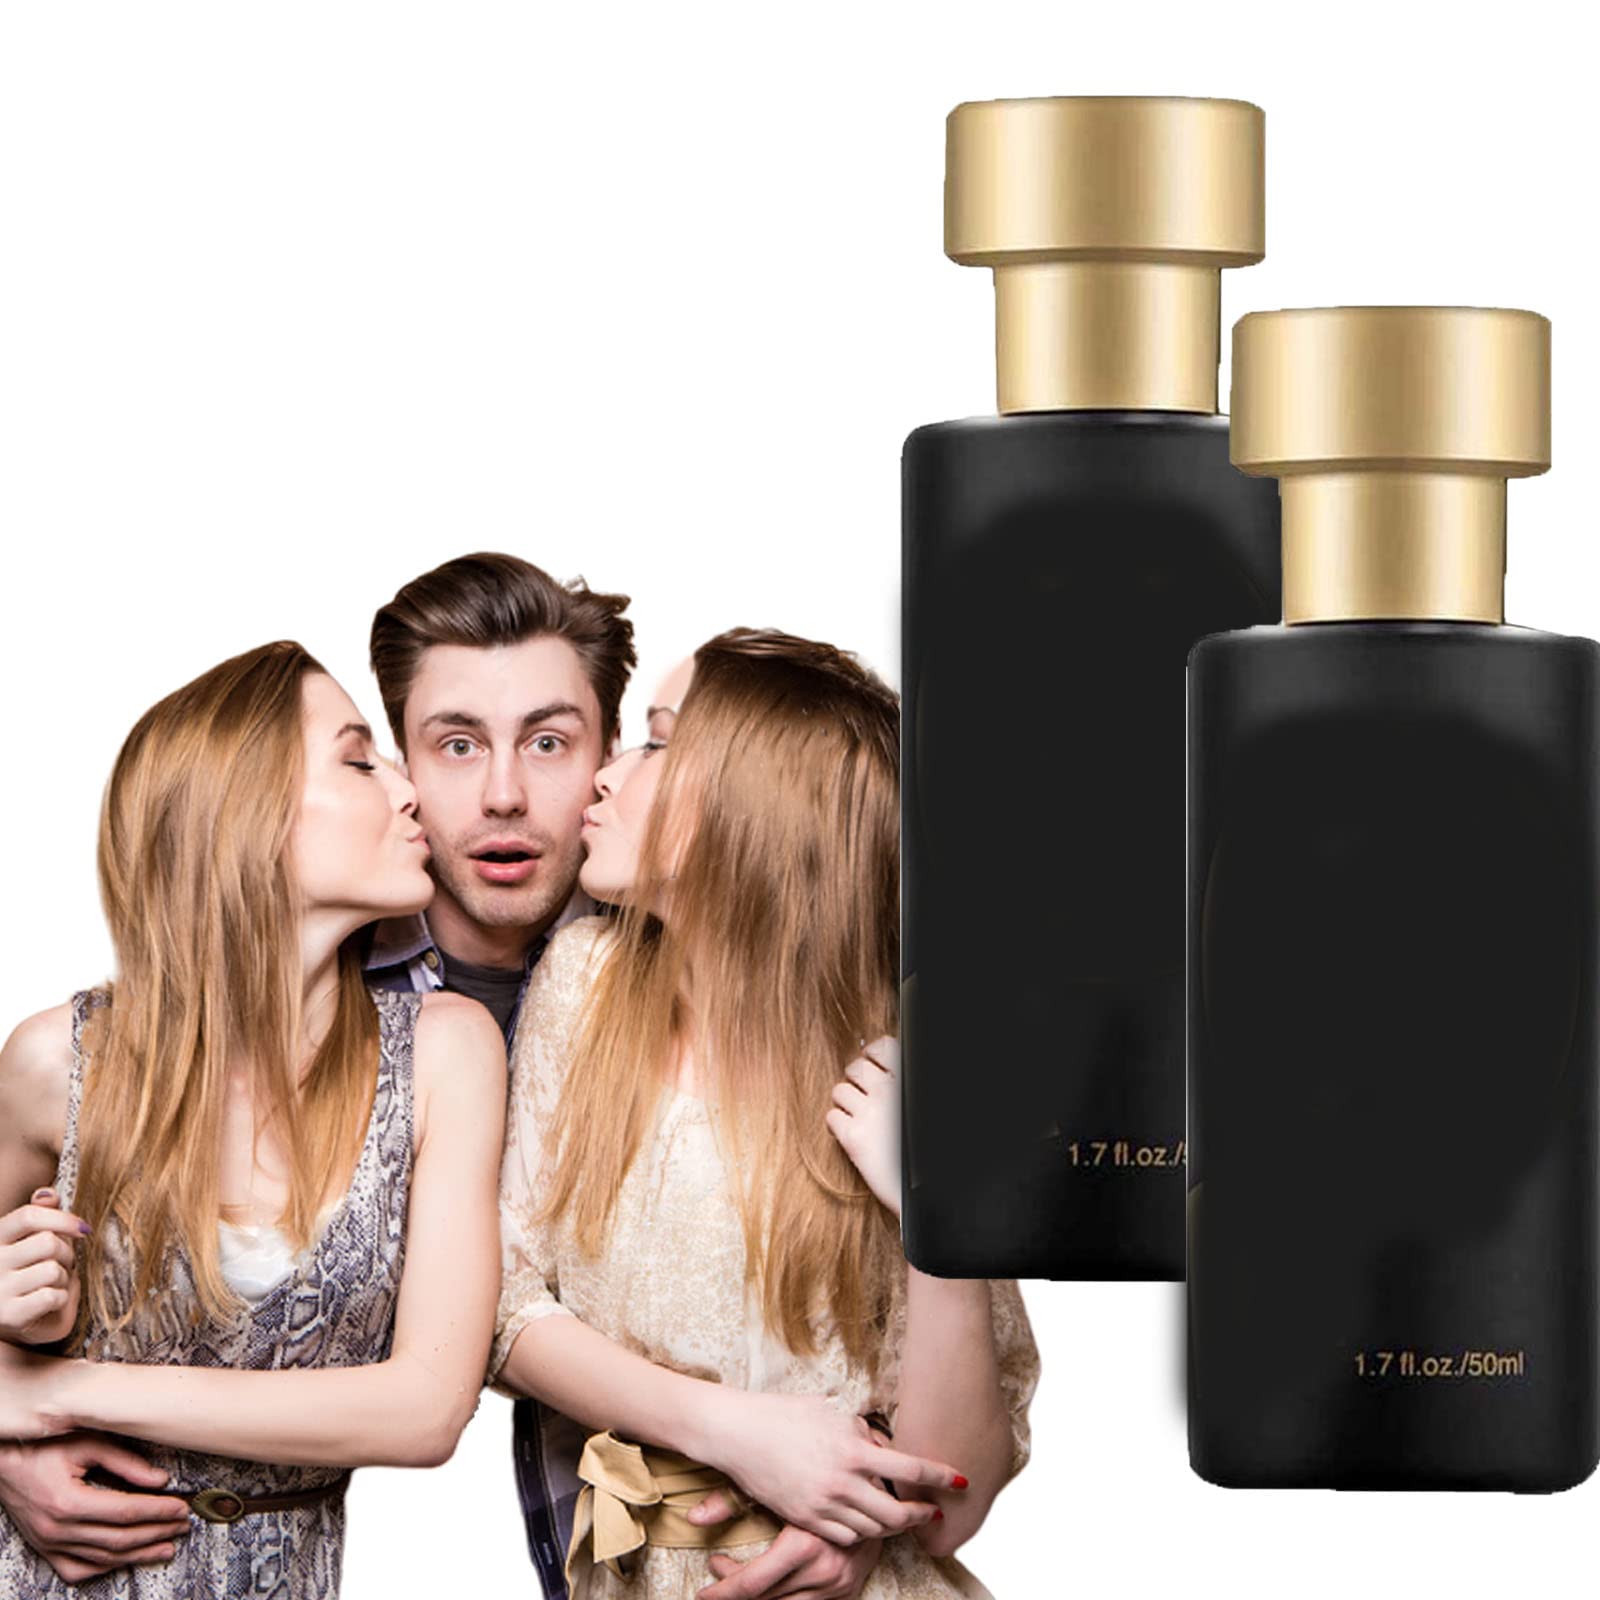 GEOBY JogujosFeromonas Perfume (For Him & Her), Jogujos Pheroman Cologne  for Men, Lure Her Perfume for